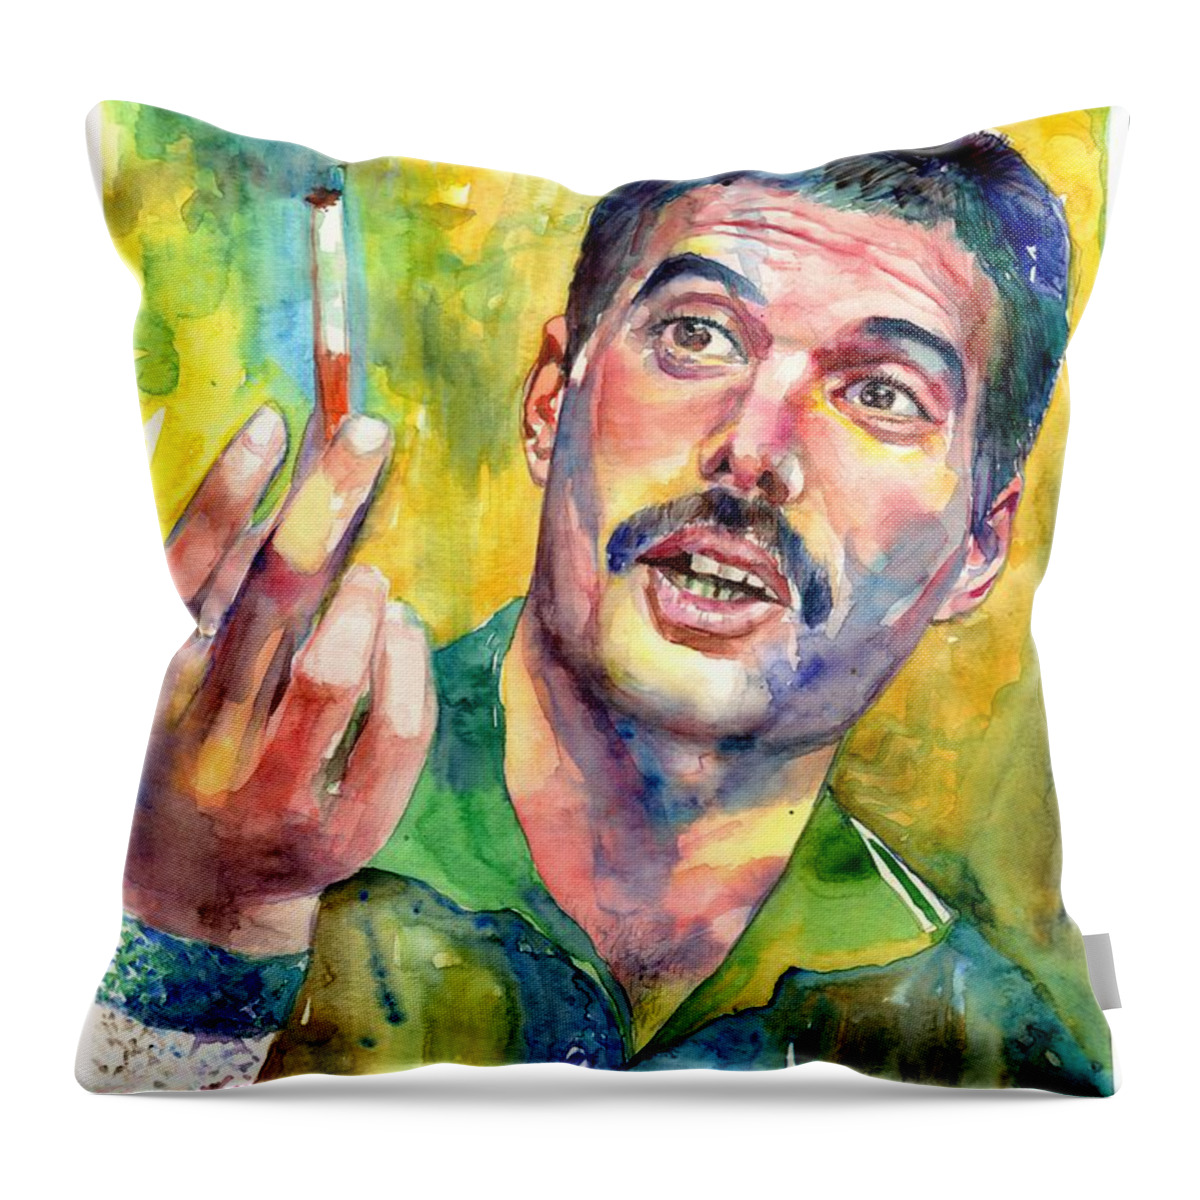 Freddie Mercury Throw Pillow featuring the painting Mr Bad Guy - Freddie Mercury Portrait by Suzann Sines